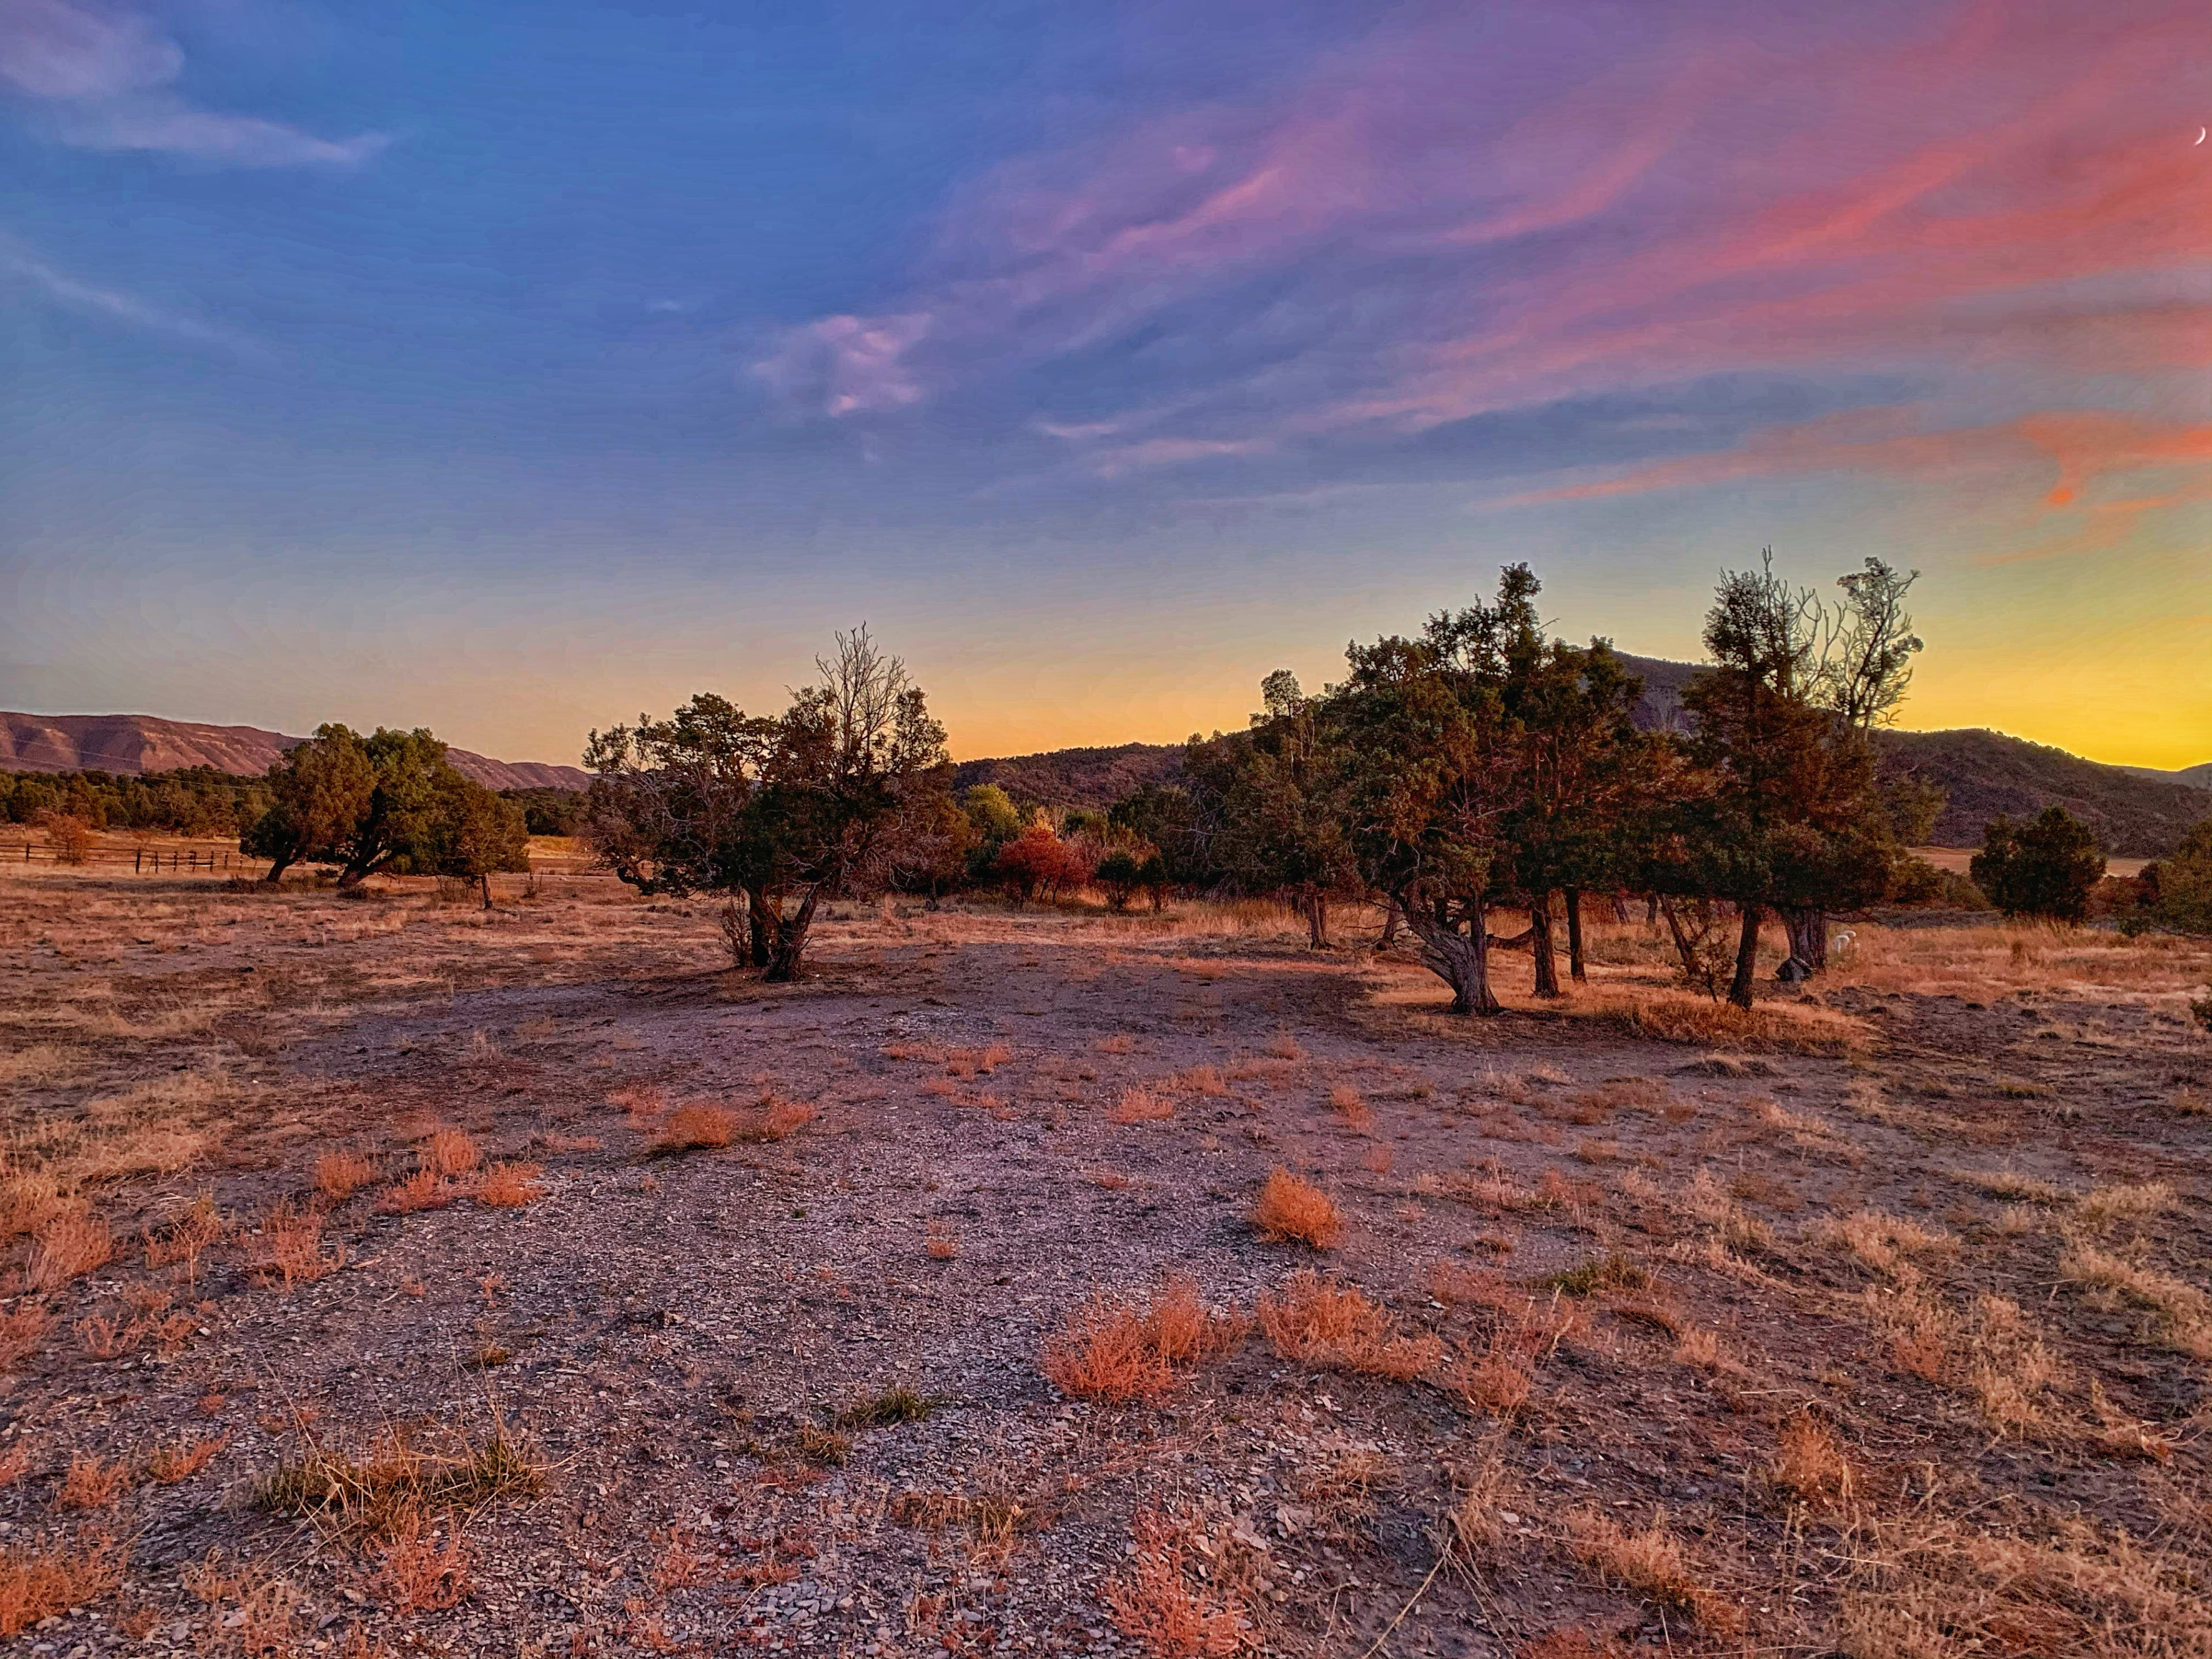 Dry RV site w/ Views of Mesa Verde